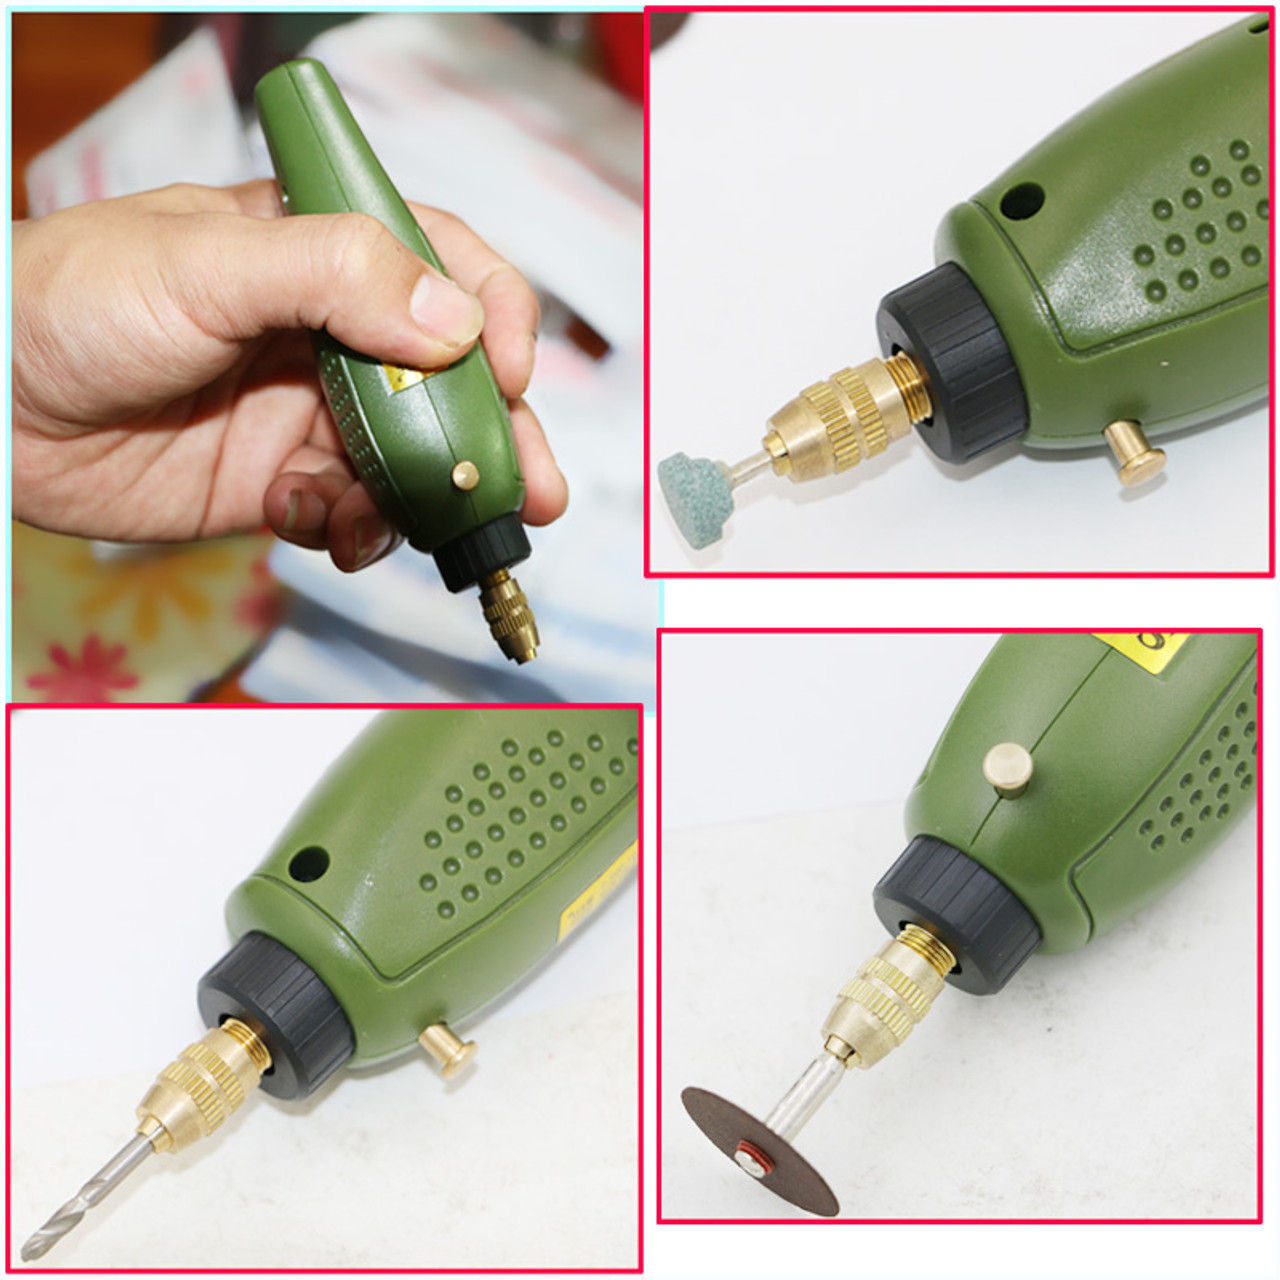 12V DC Grinder Tool Mini dremel drill Electric Grinding Set for